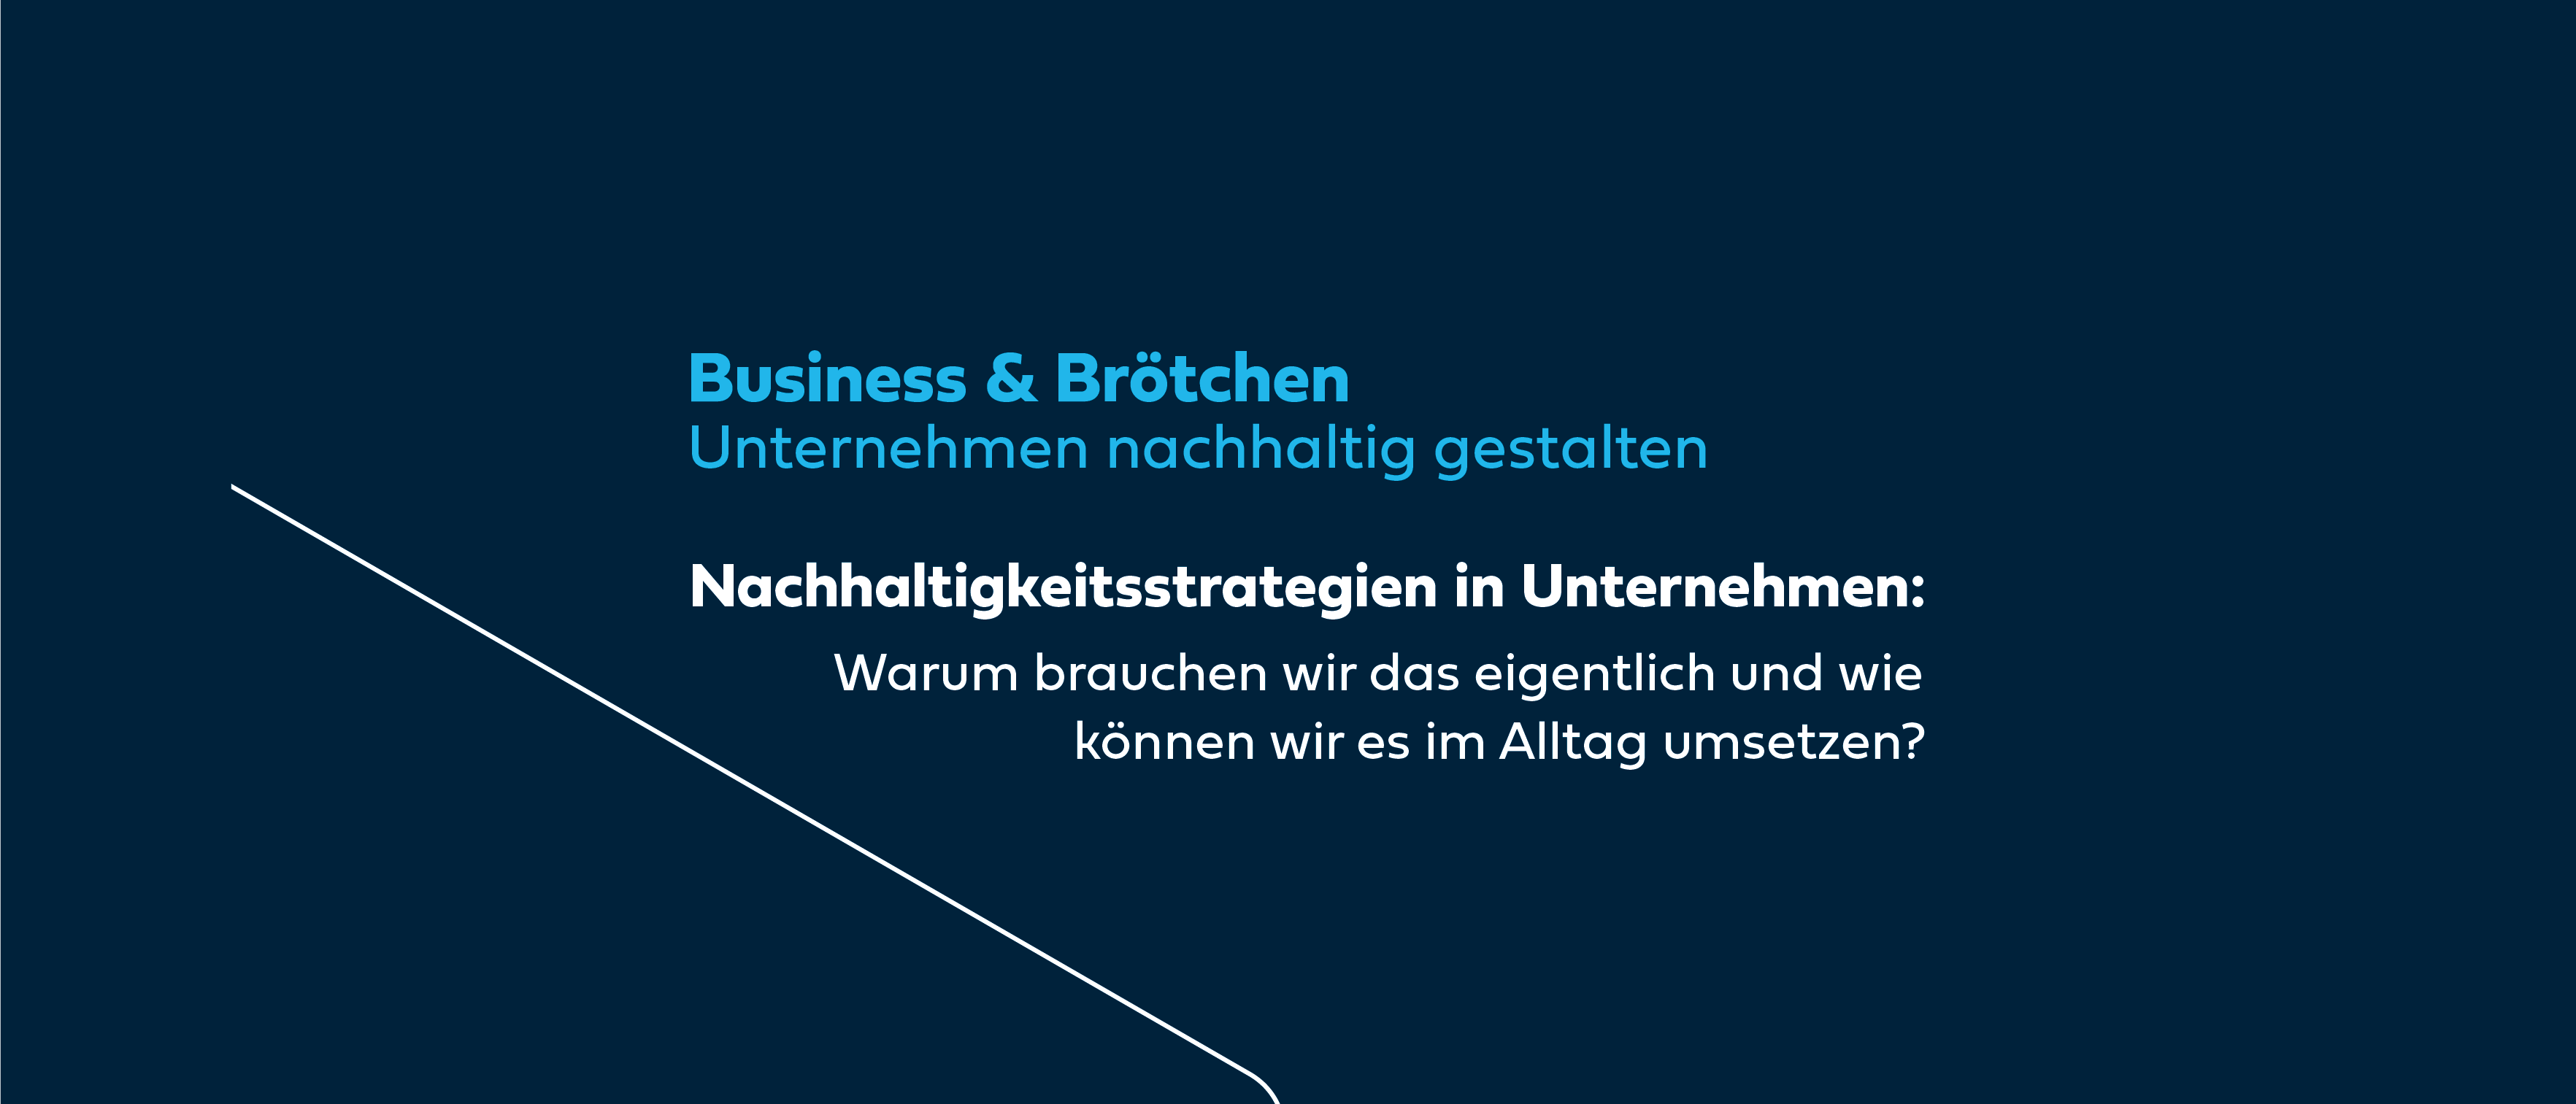 Business & Brötchen